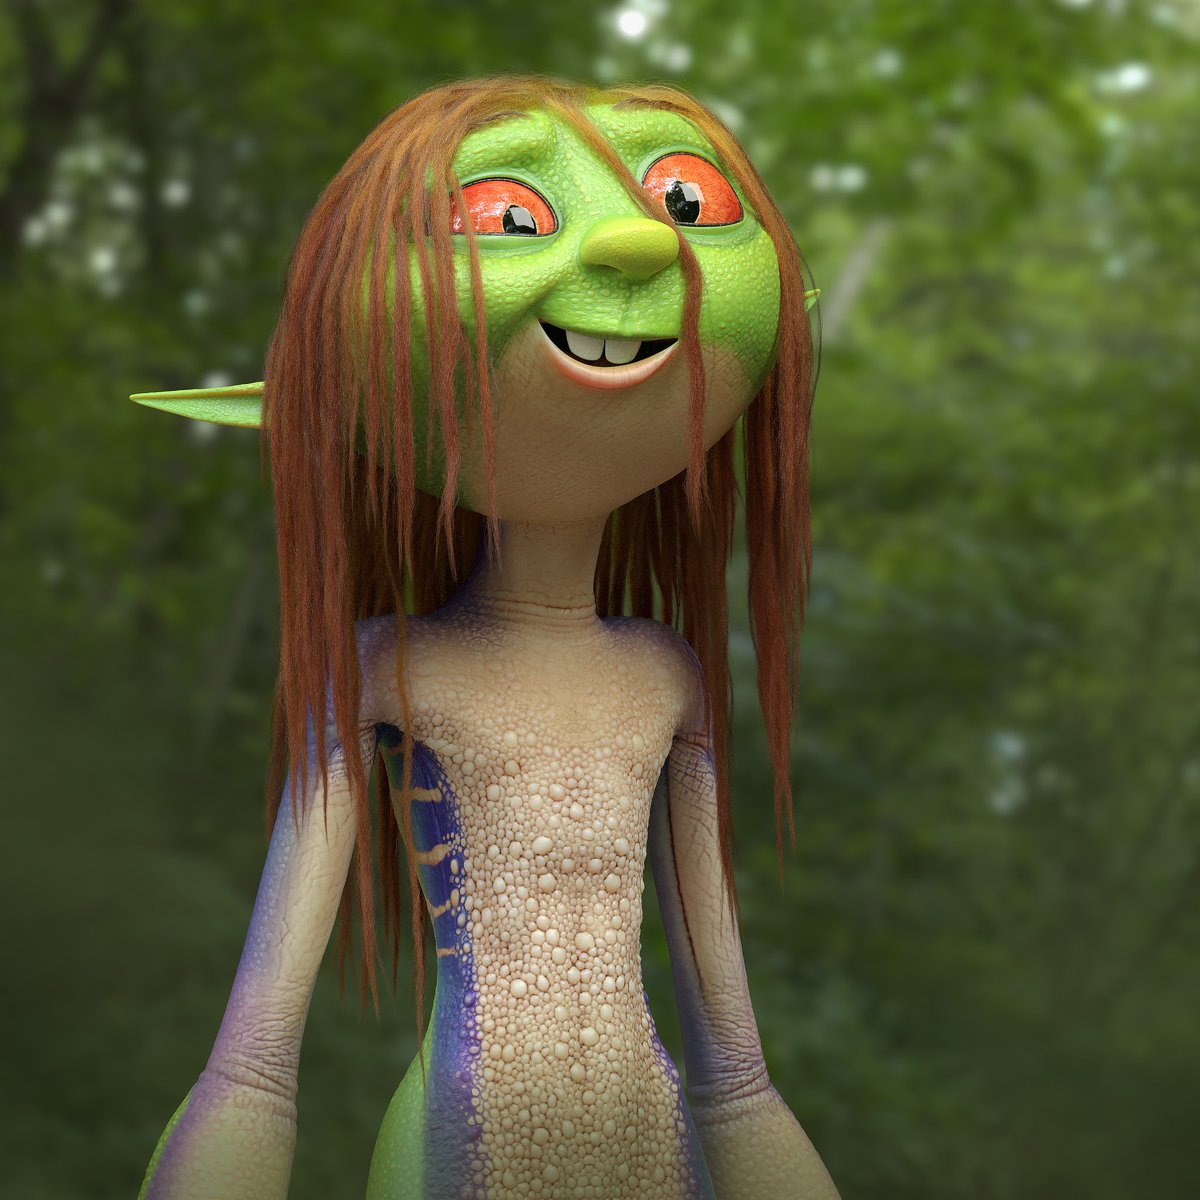 Front pose of the froggirl character!
#characterart #characterdesign #girl #amfibian #render #character3d #creature #digital3D